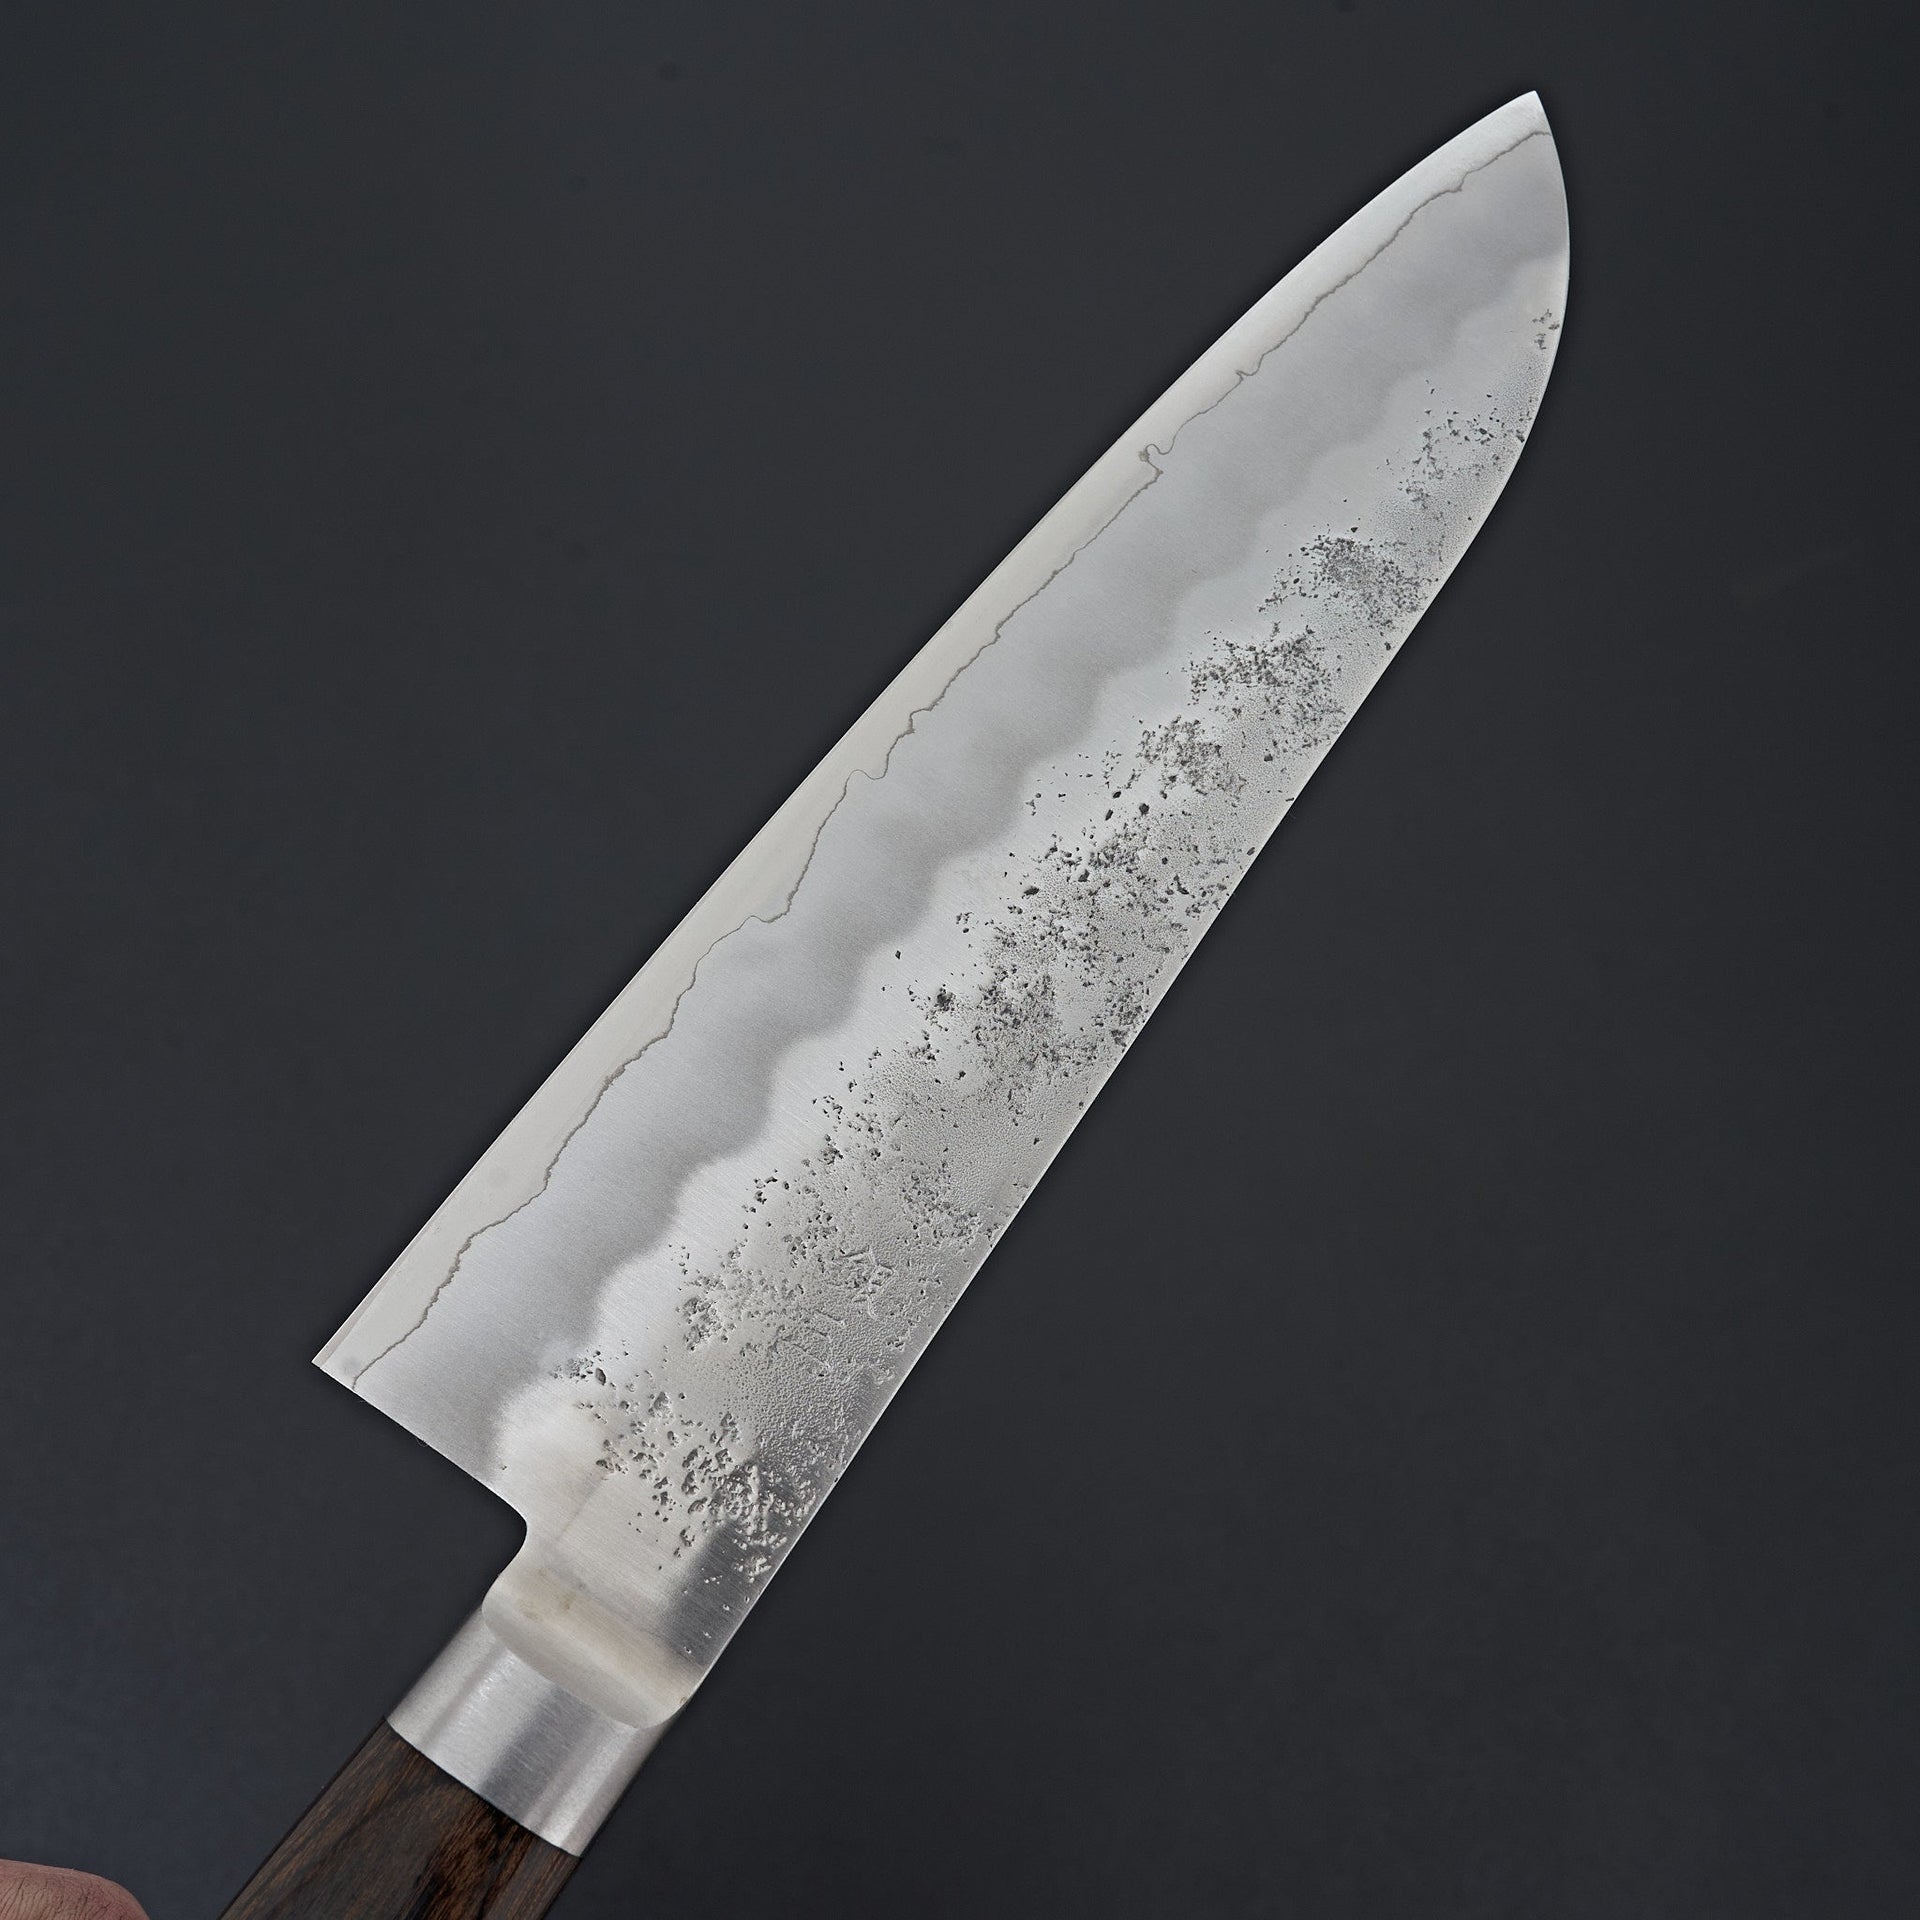 Tsunehisa Ginsan Western Nashiji Santoku 180mm-Knife-Tsunehisa-Carbon Knife Co